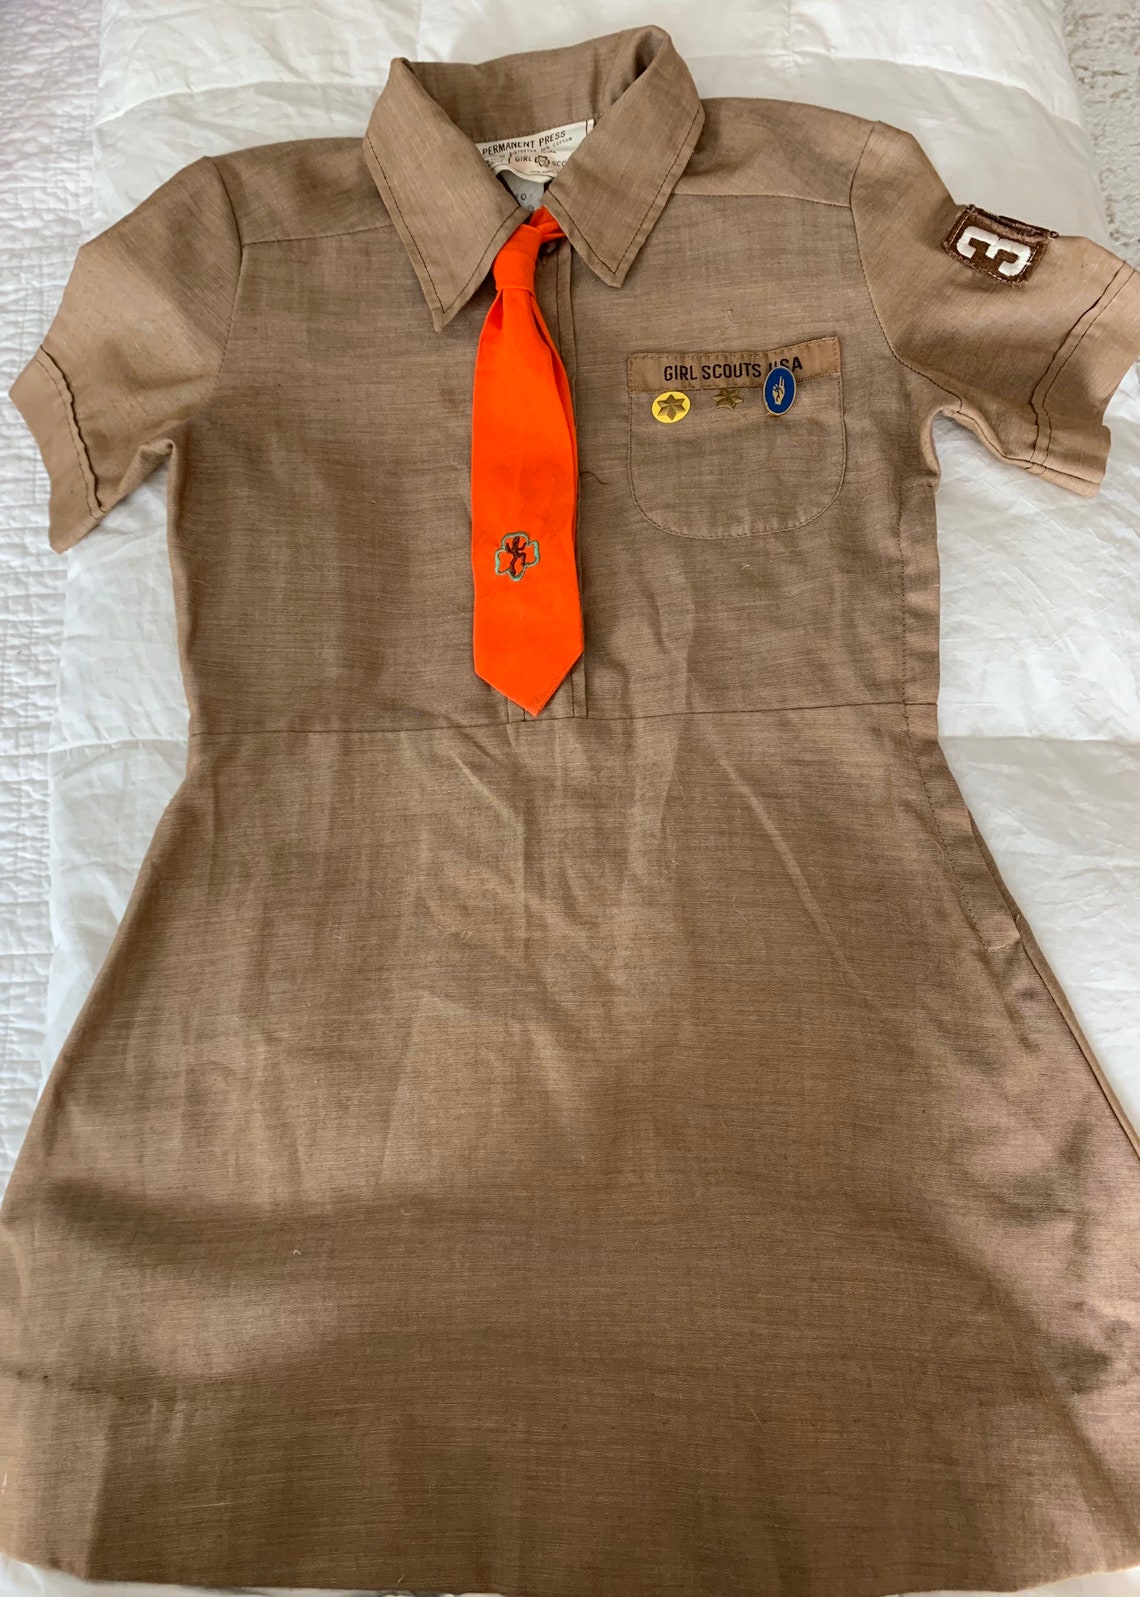 Vintage Brownie Uniform with pins | Etsy